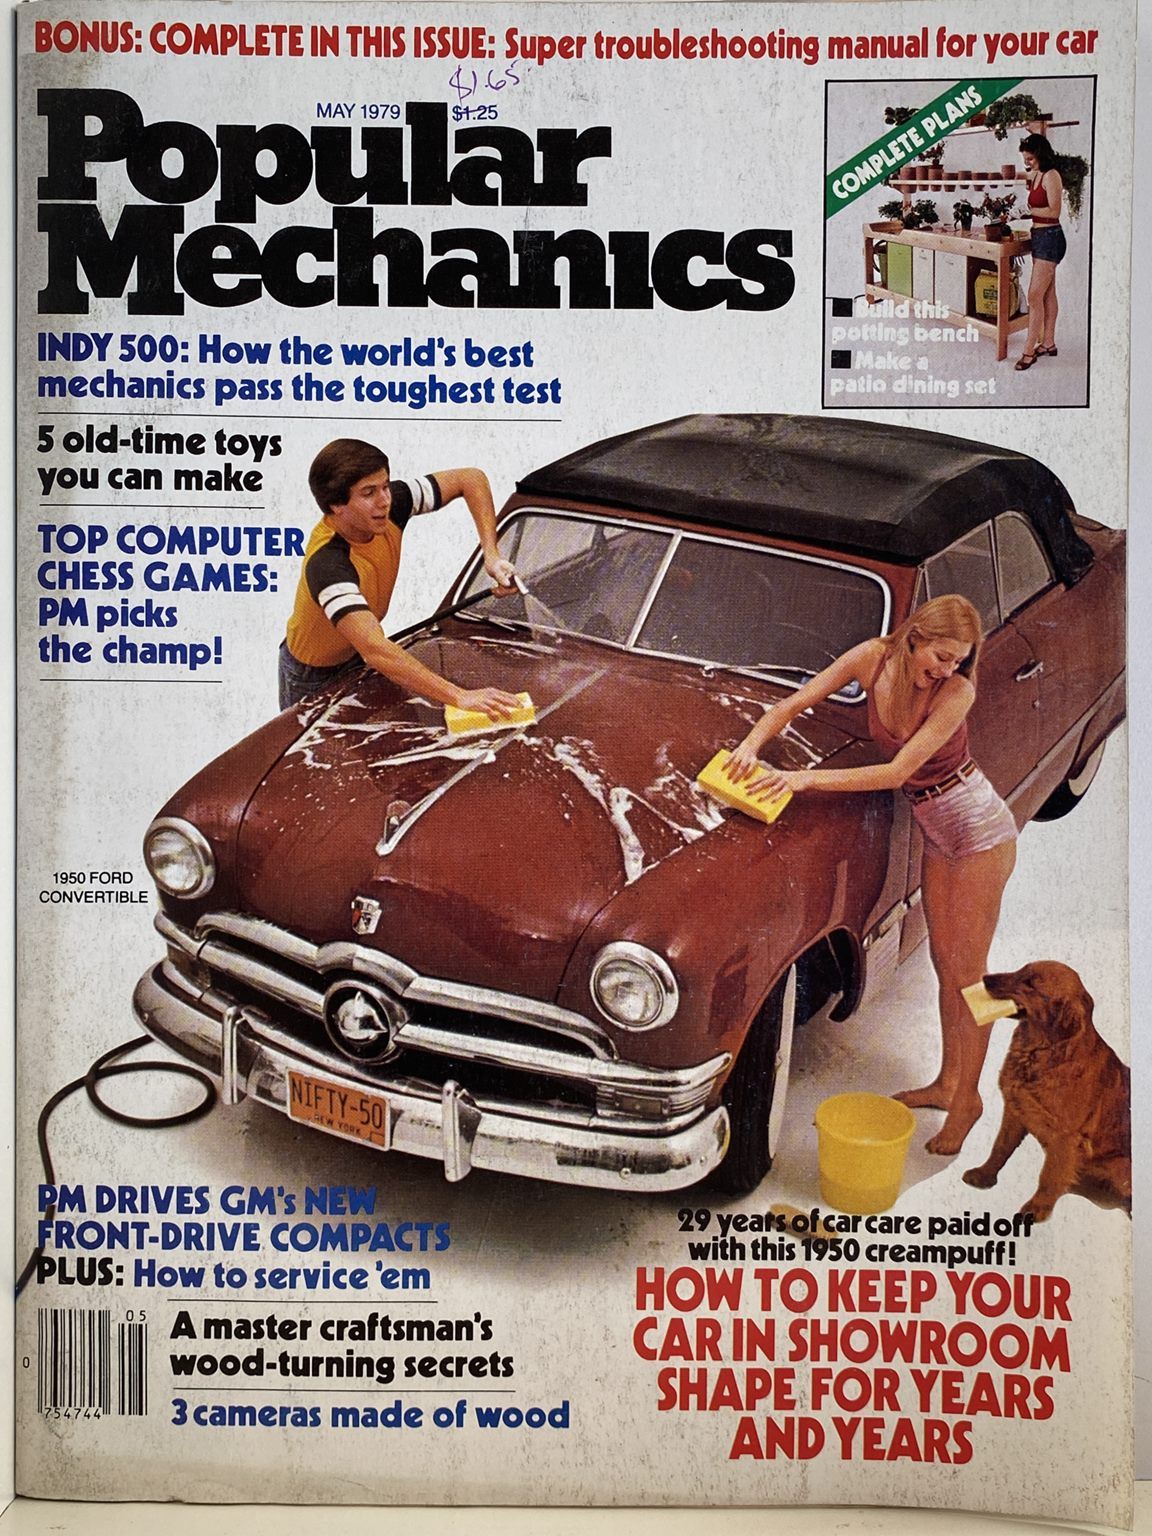 VINTAGE MAGAZINE: Popular Mechanics - Vol. 151, No. 5 - May 1979